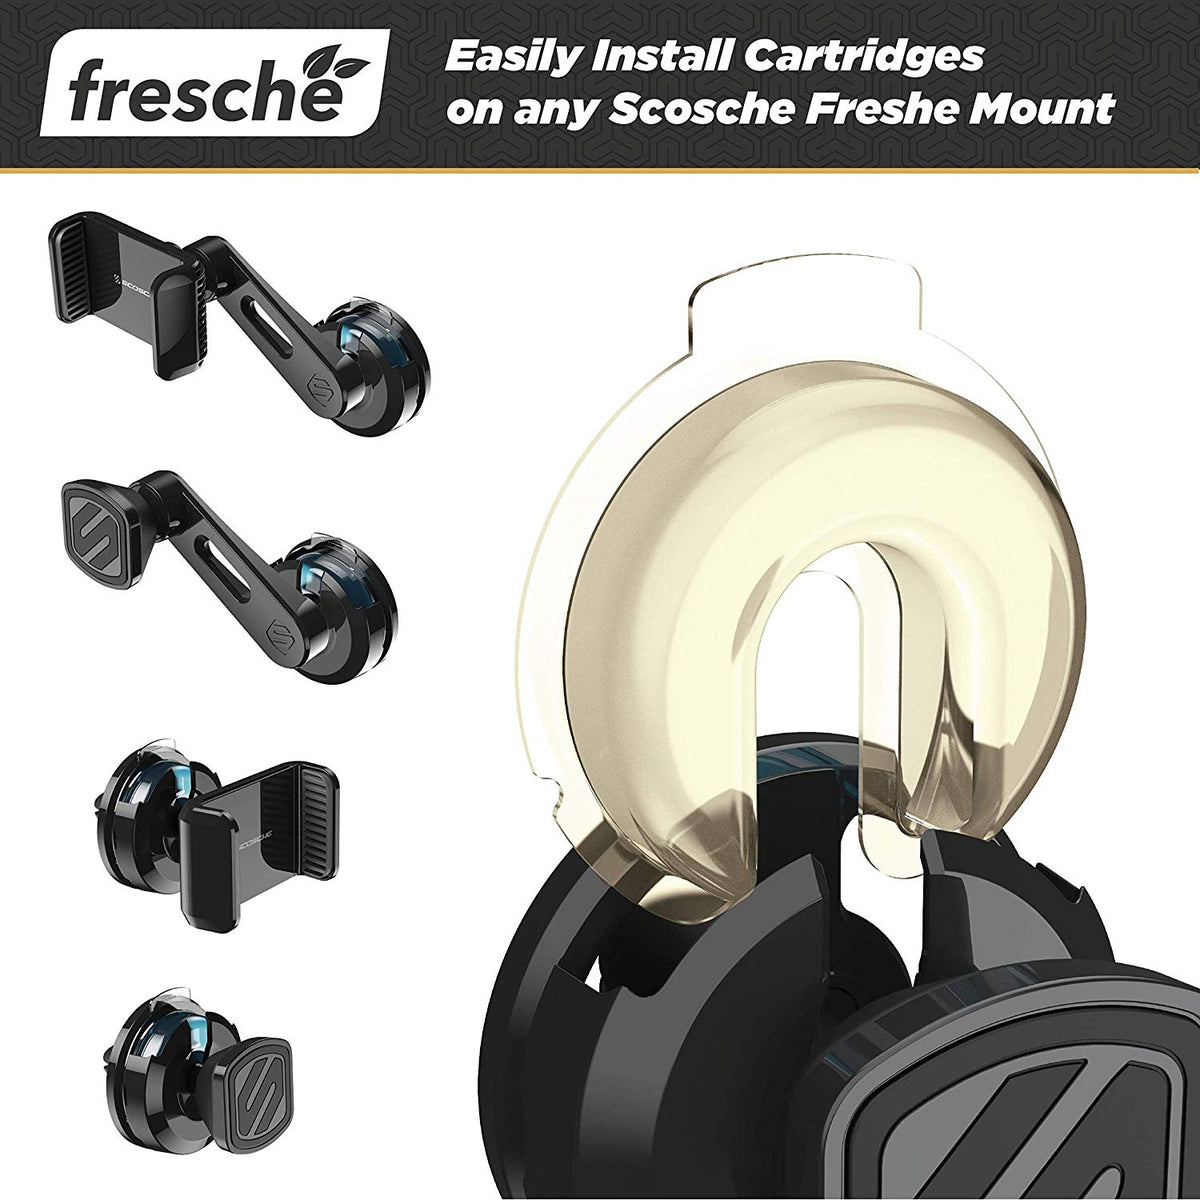 SCOSCHE Air Freshener Refill Cartridges for Fresche Mounts - 2 Packs - Vanilla